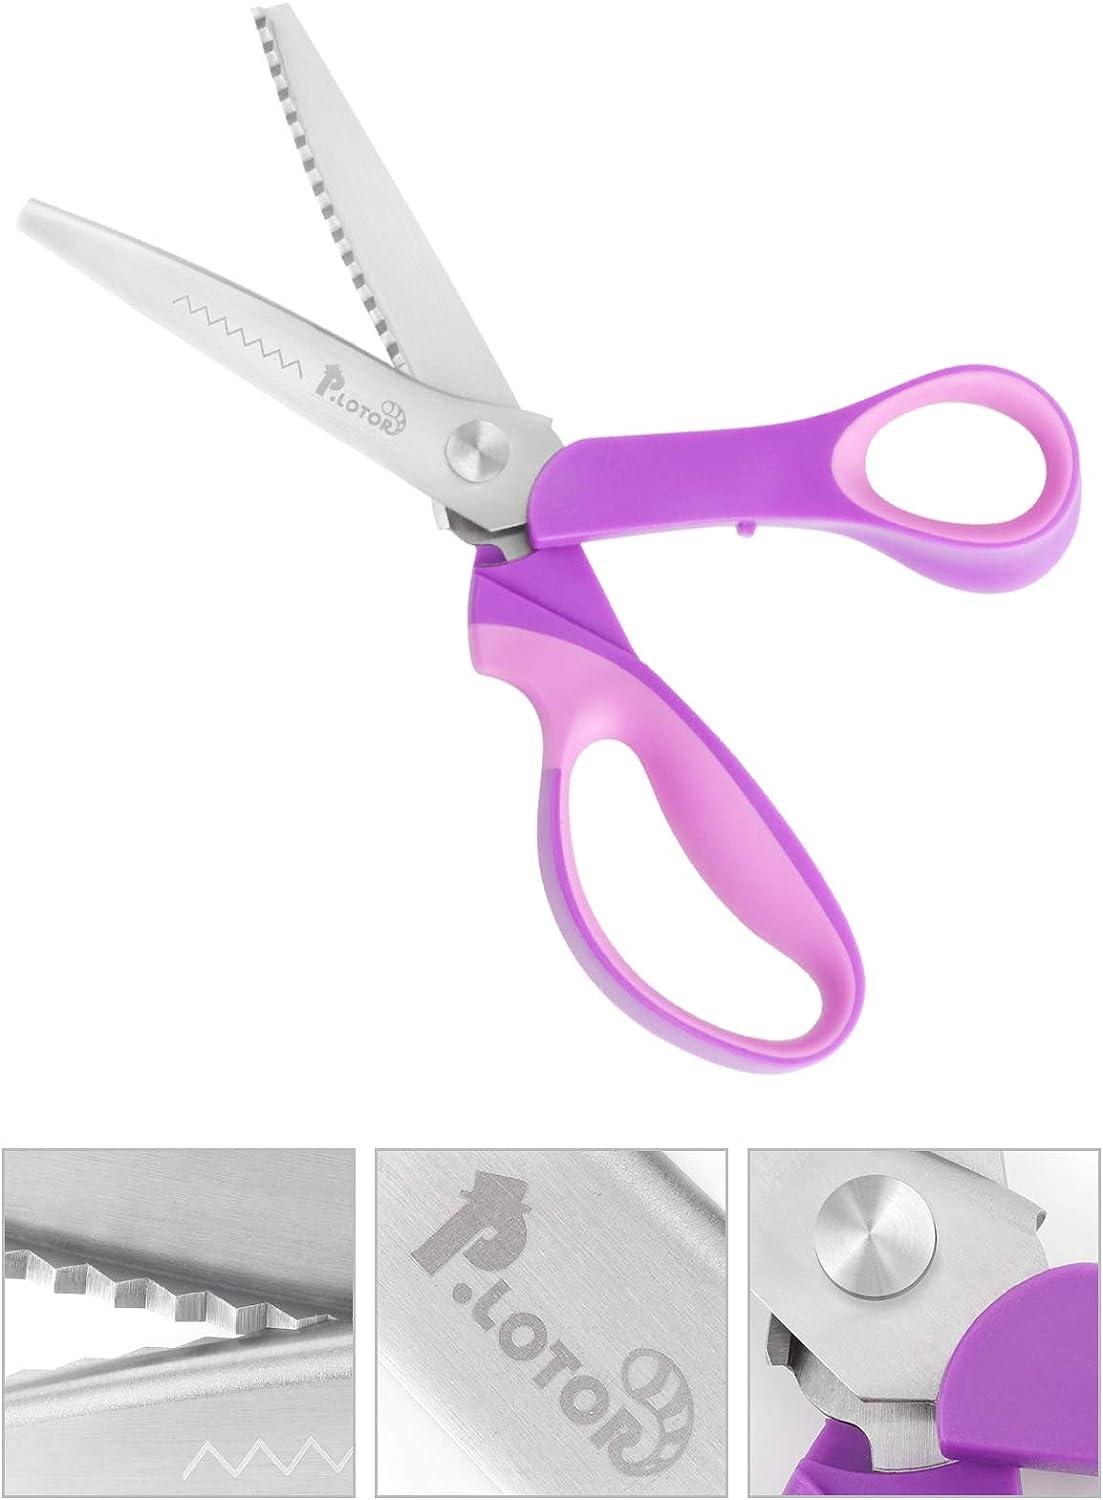 Pinking Shears Scissors, Scissors Paper Crafts